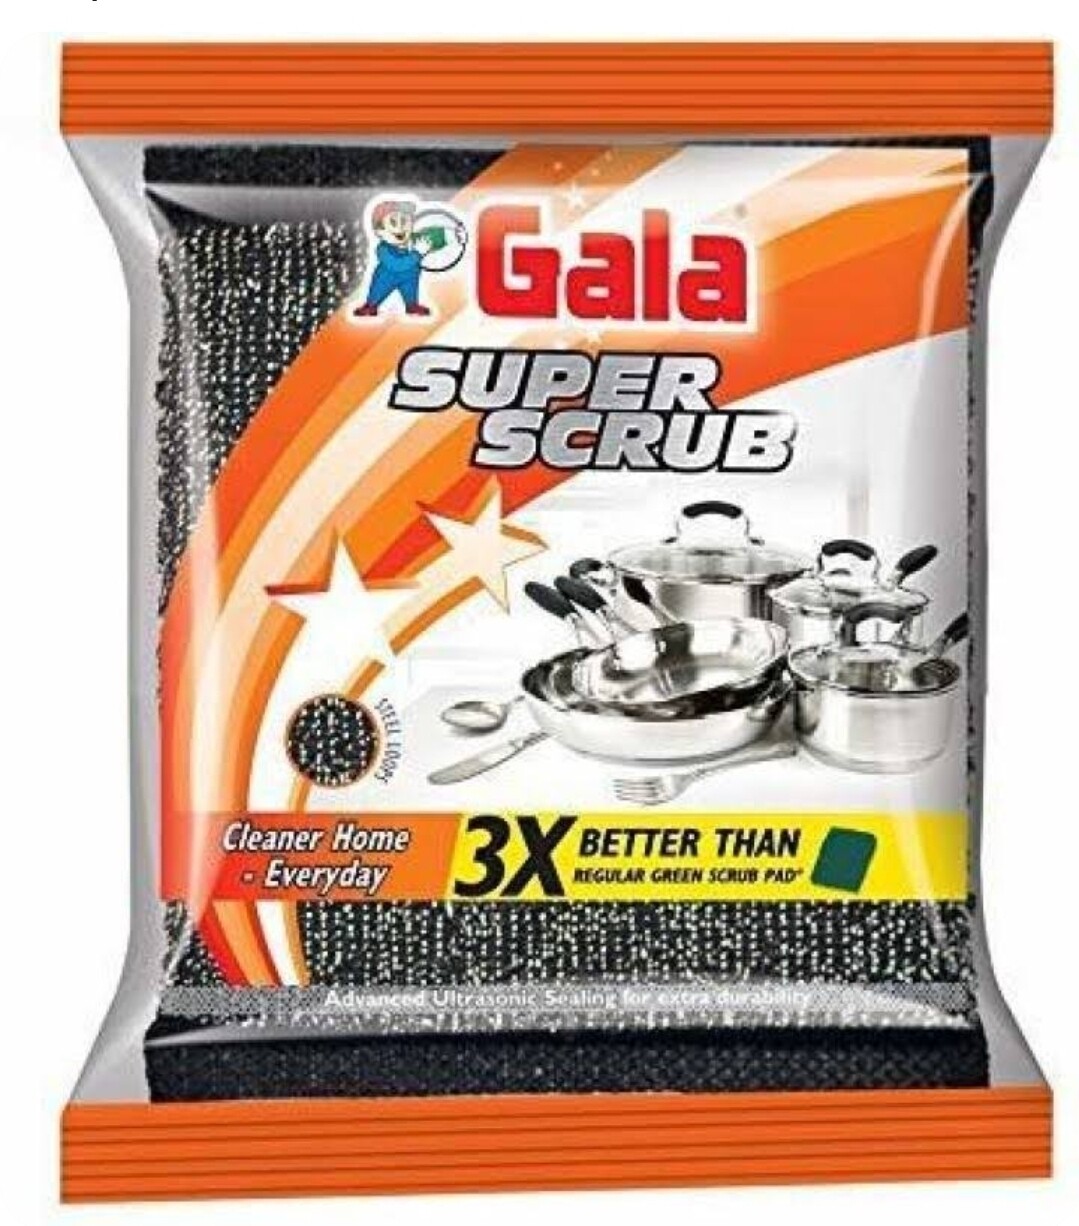 Gala Super Scrub pack of 2